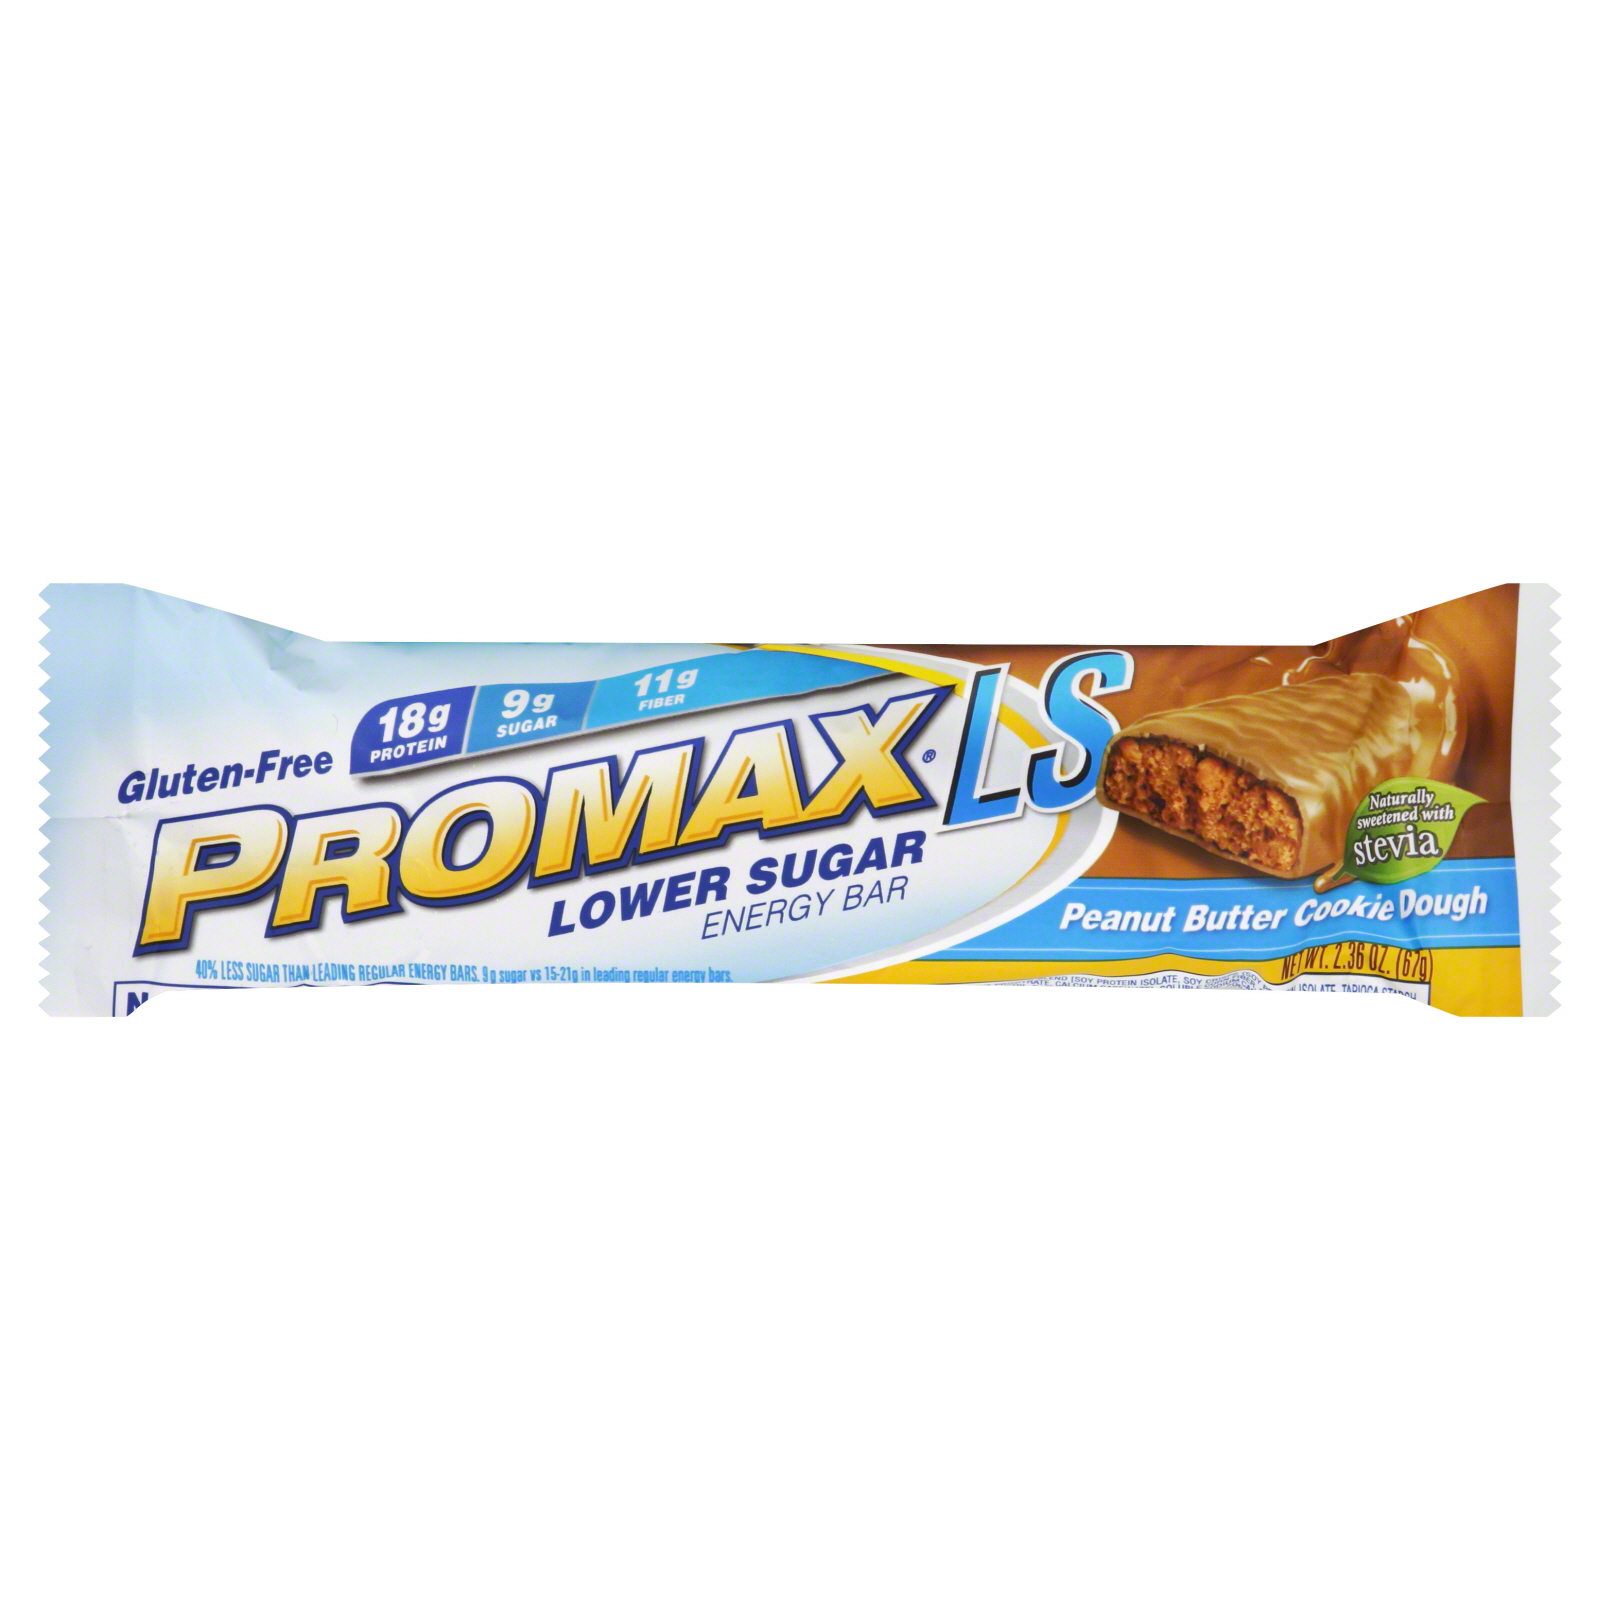 Promax Lower Sugar Energy Bar - Peanut Butter Cookie Dough, 2.36 oz.